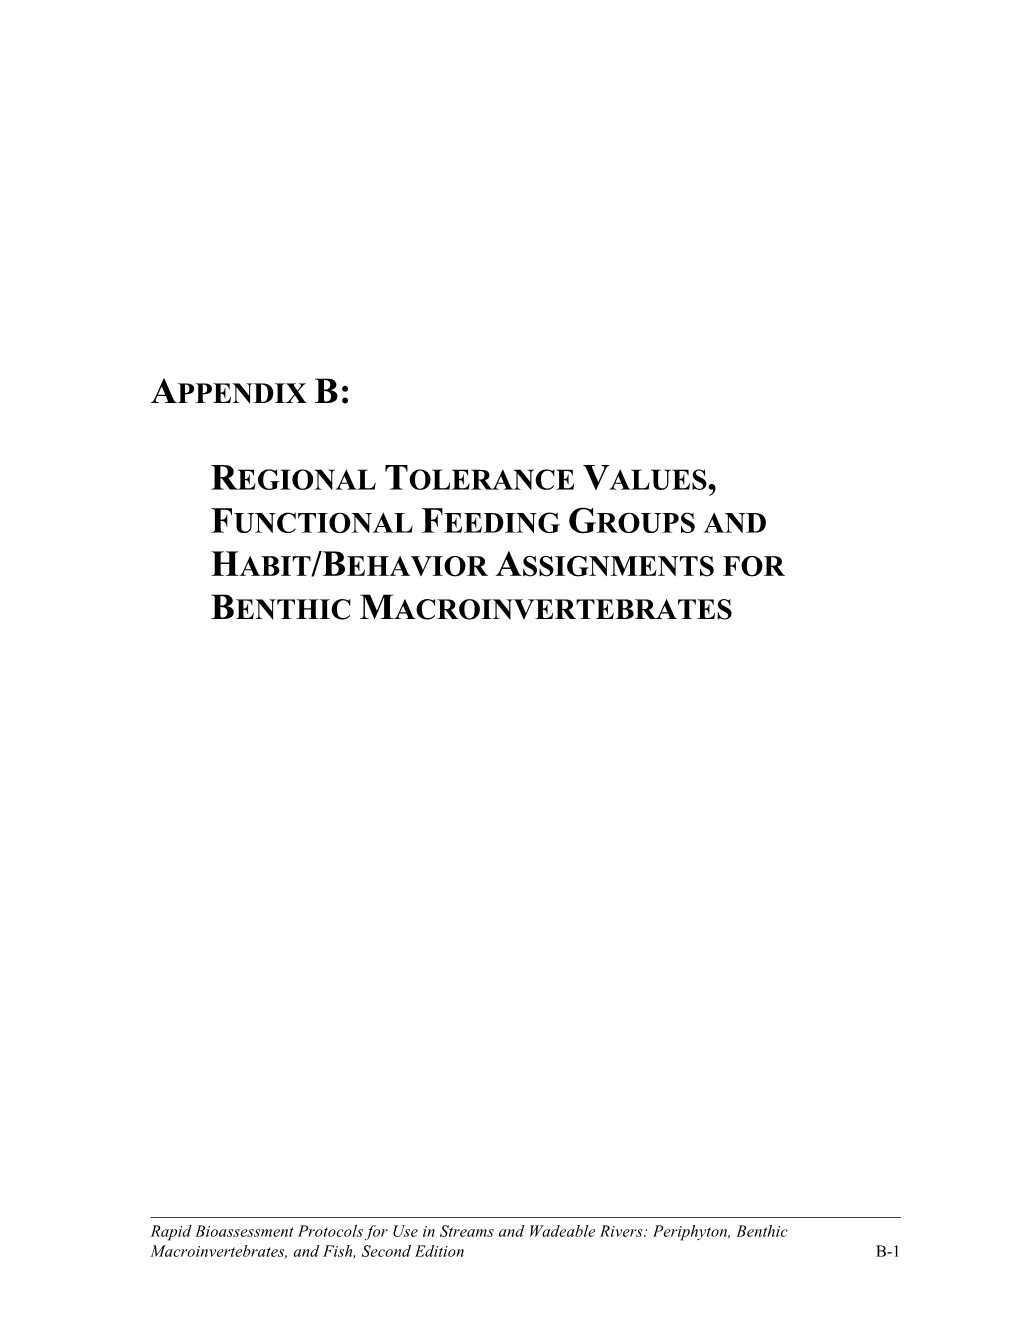 Regional Tolerance Values, Functional Feeding Groups and Habit/Behavior Assignments for Benthic Macroinvertebrates